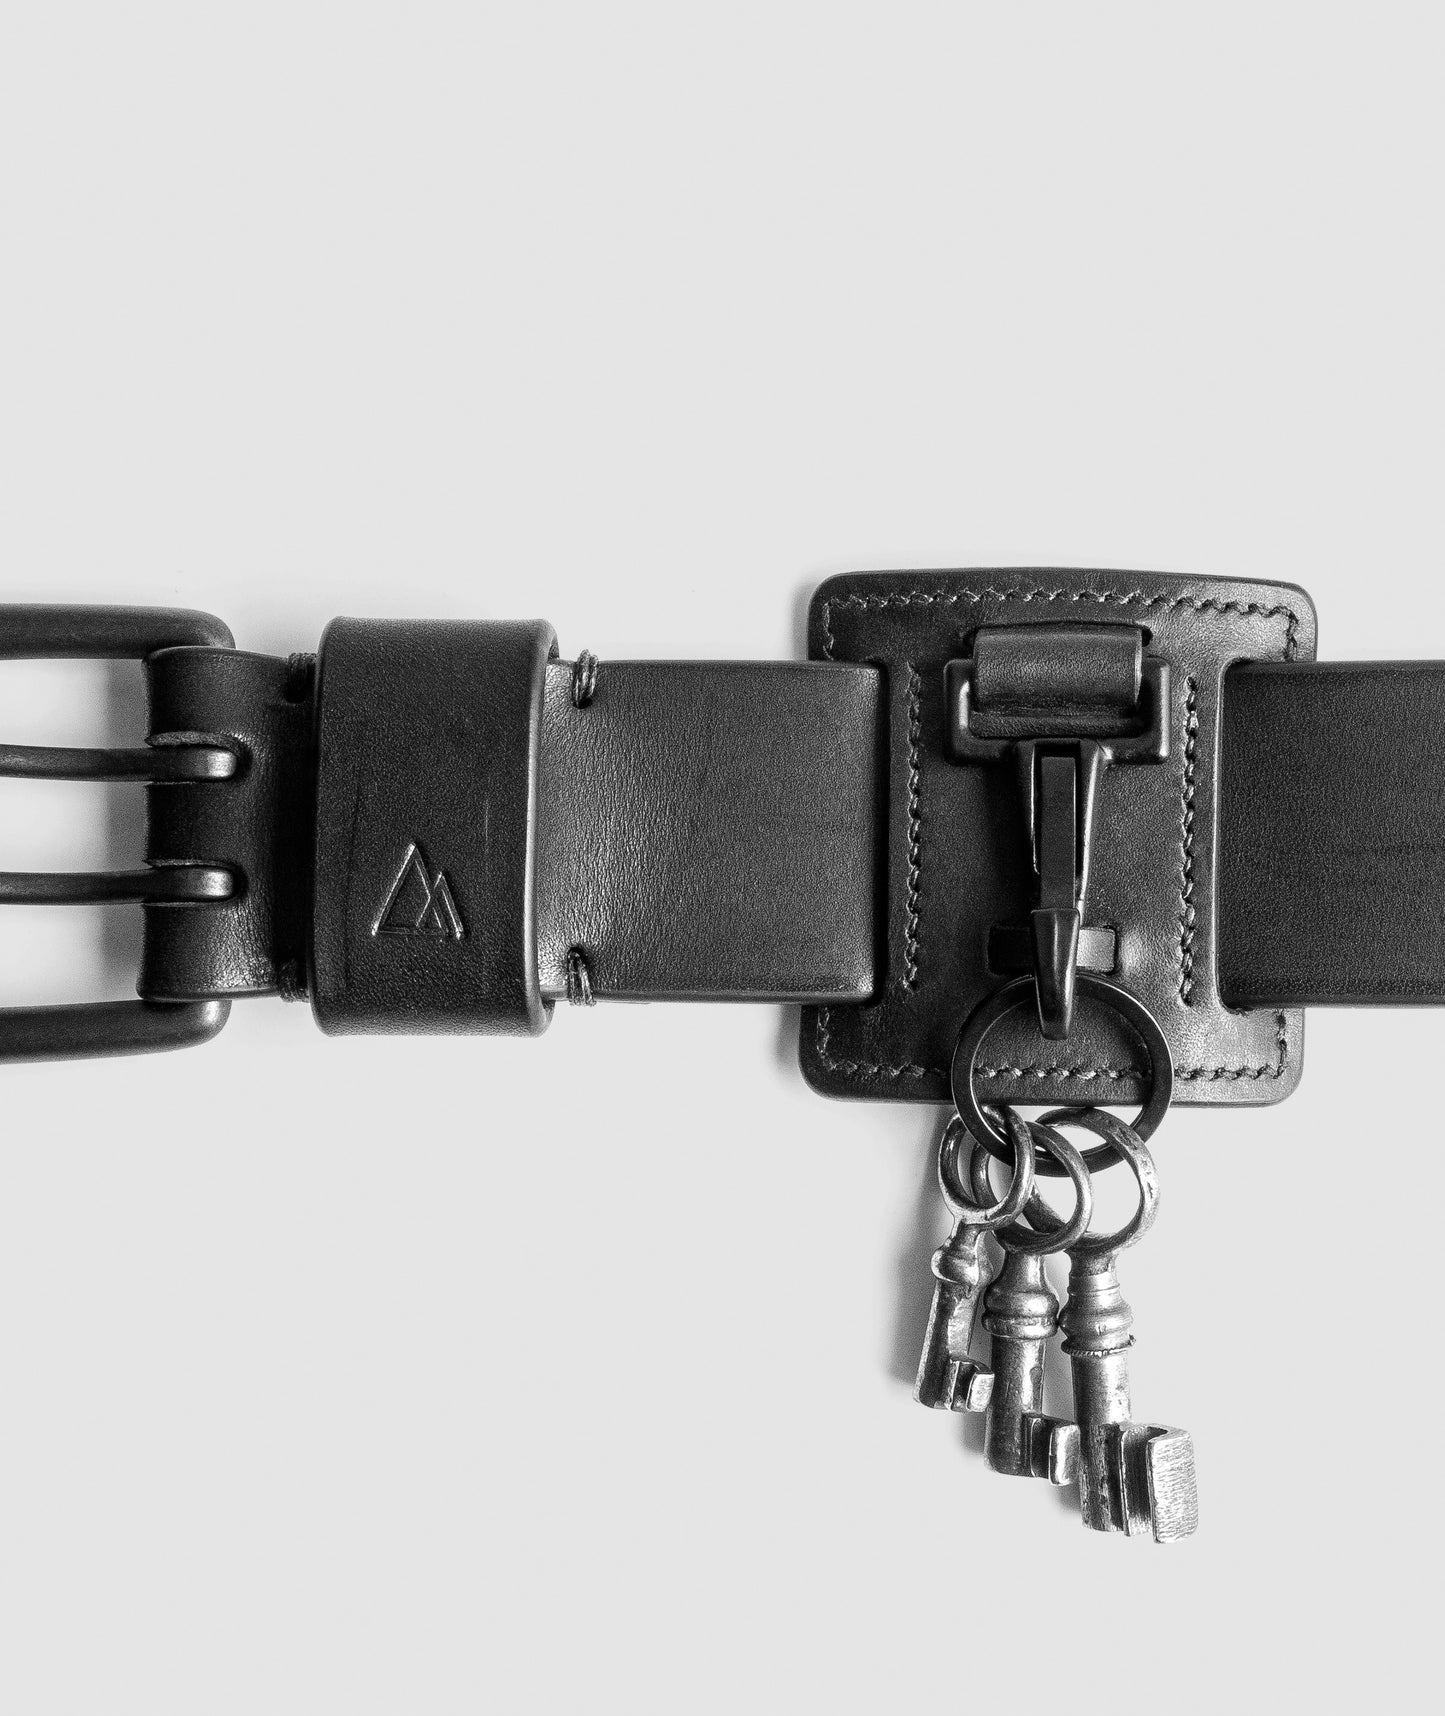 Black handmade leather belt keychain by darksails - porte clefs de ceinture faite main en cuir noir